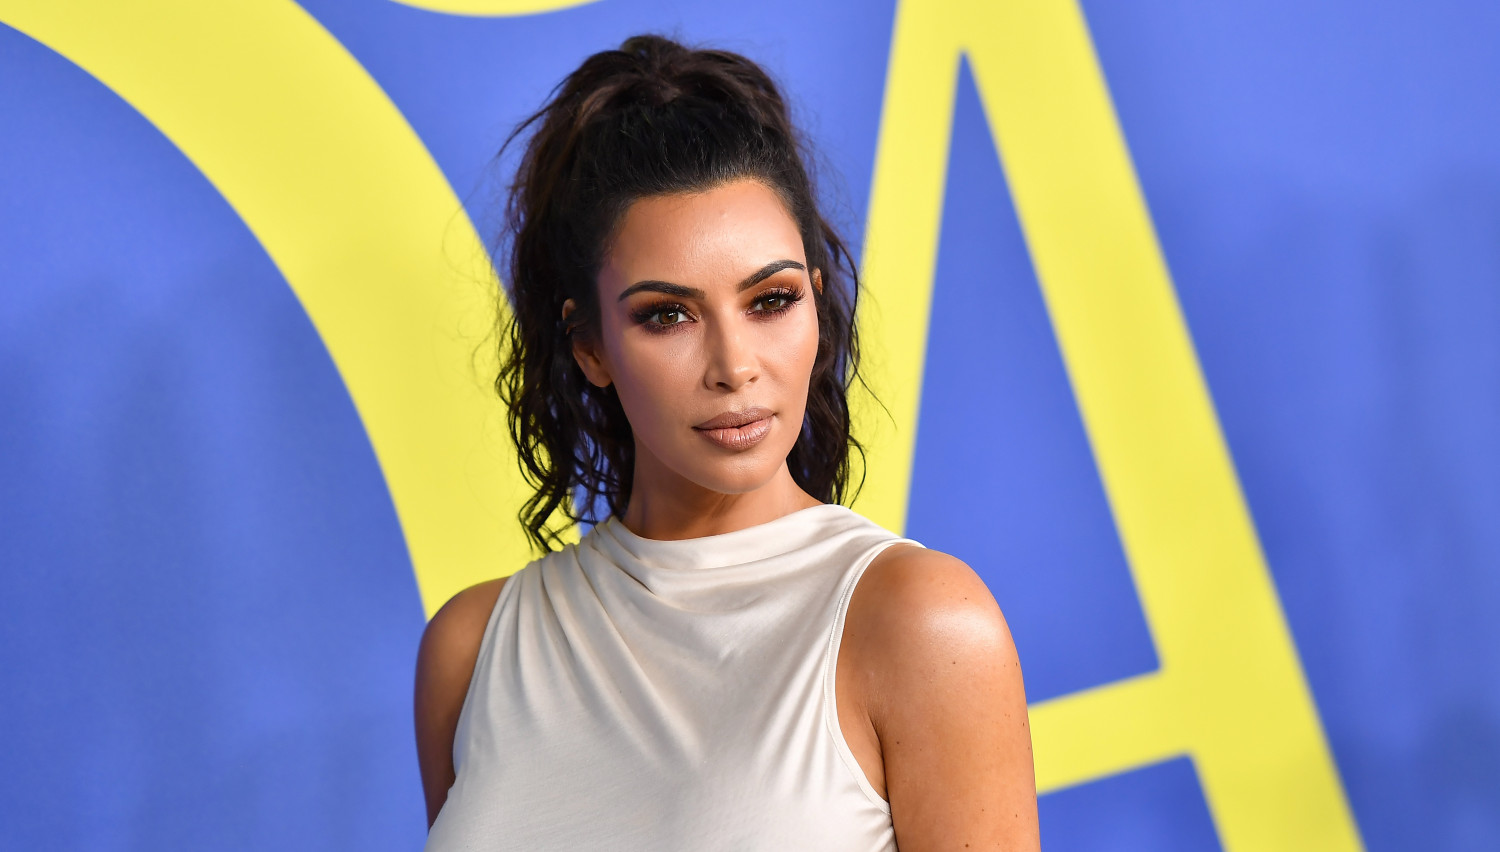 Kim Kardashian West Tweets Support for Brendan Dassey From Netflix’s ‘Making a Murderer’